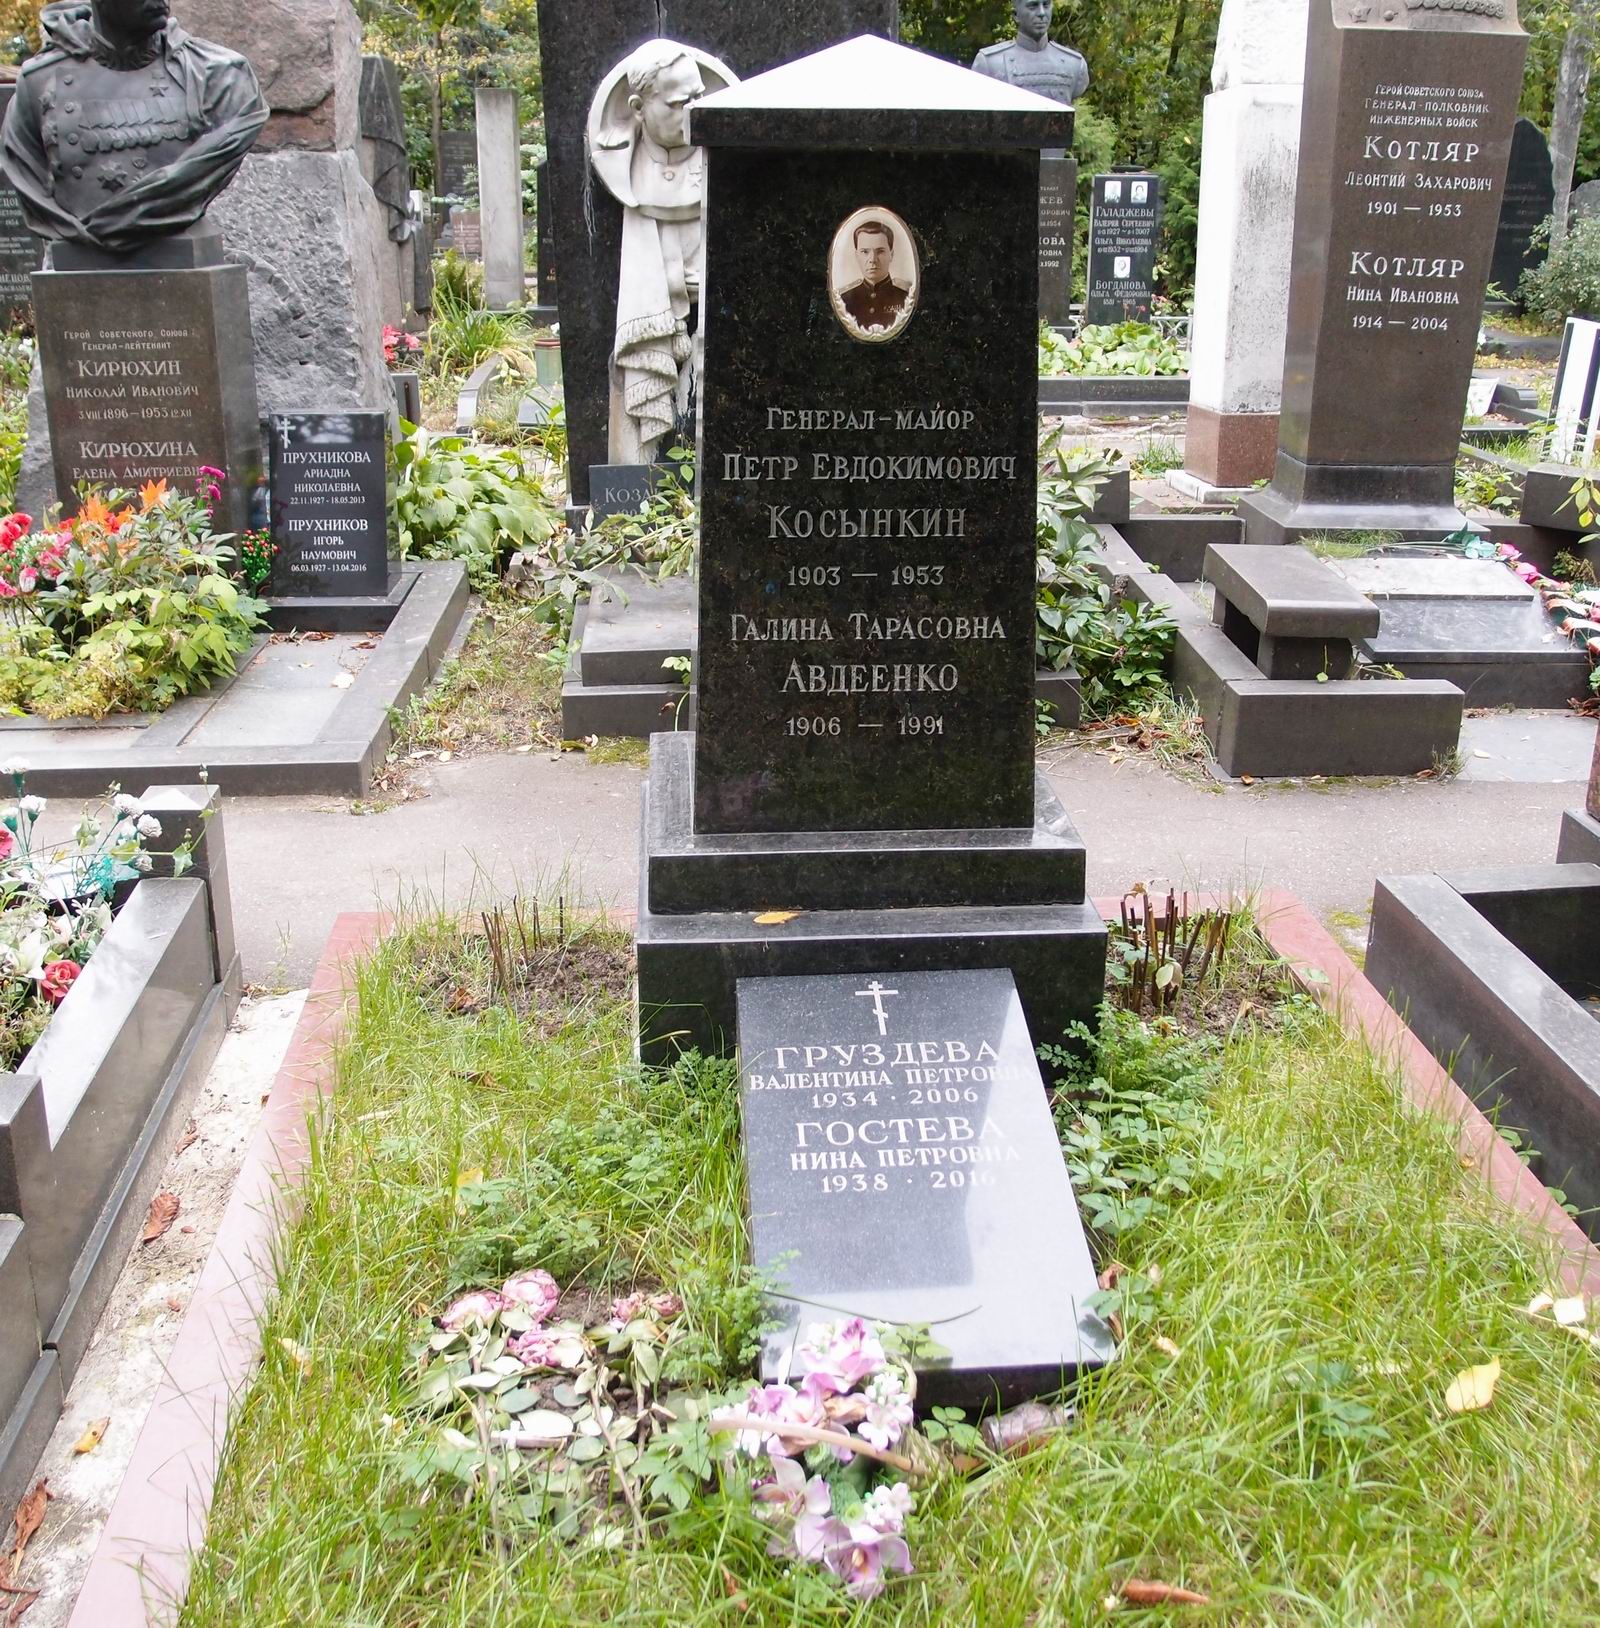 Памятник на могиле Косынкина П.Е. (1903-1953), на Новодевичьем кладбище (4-22-15).